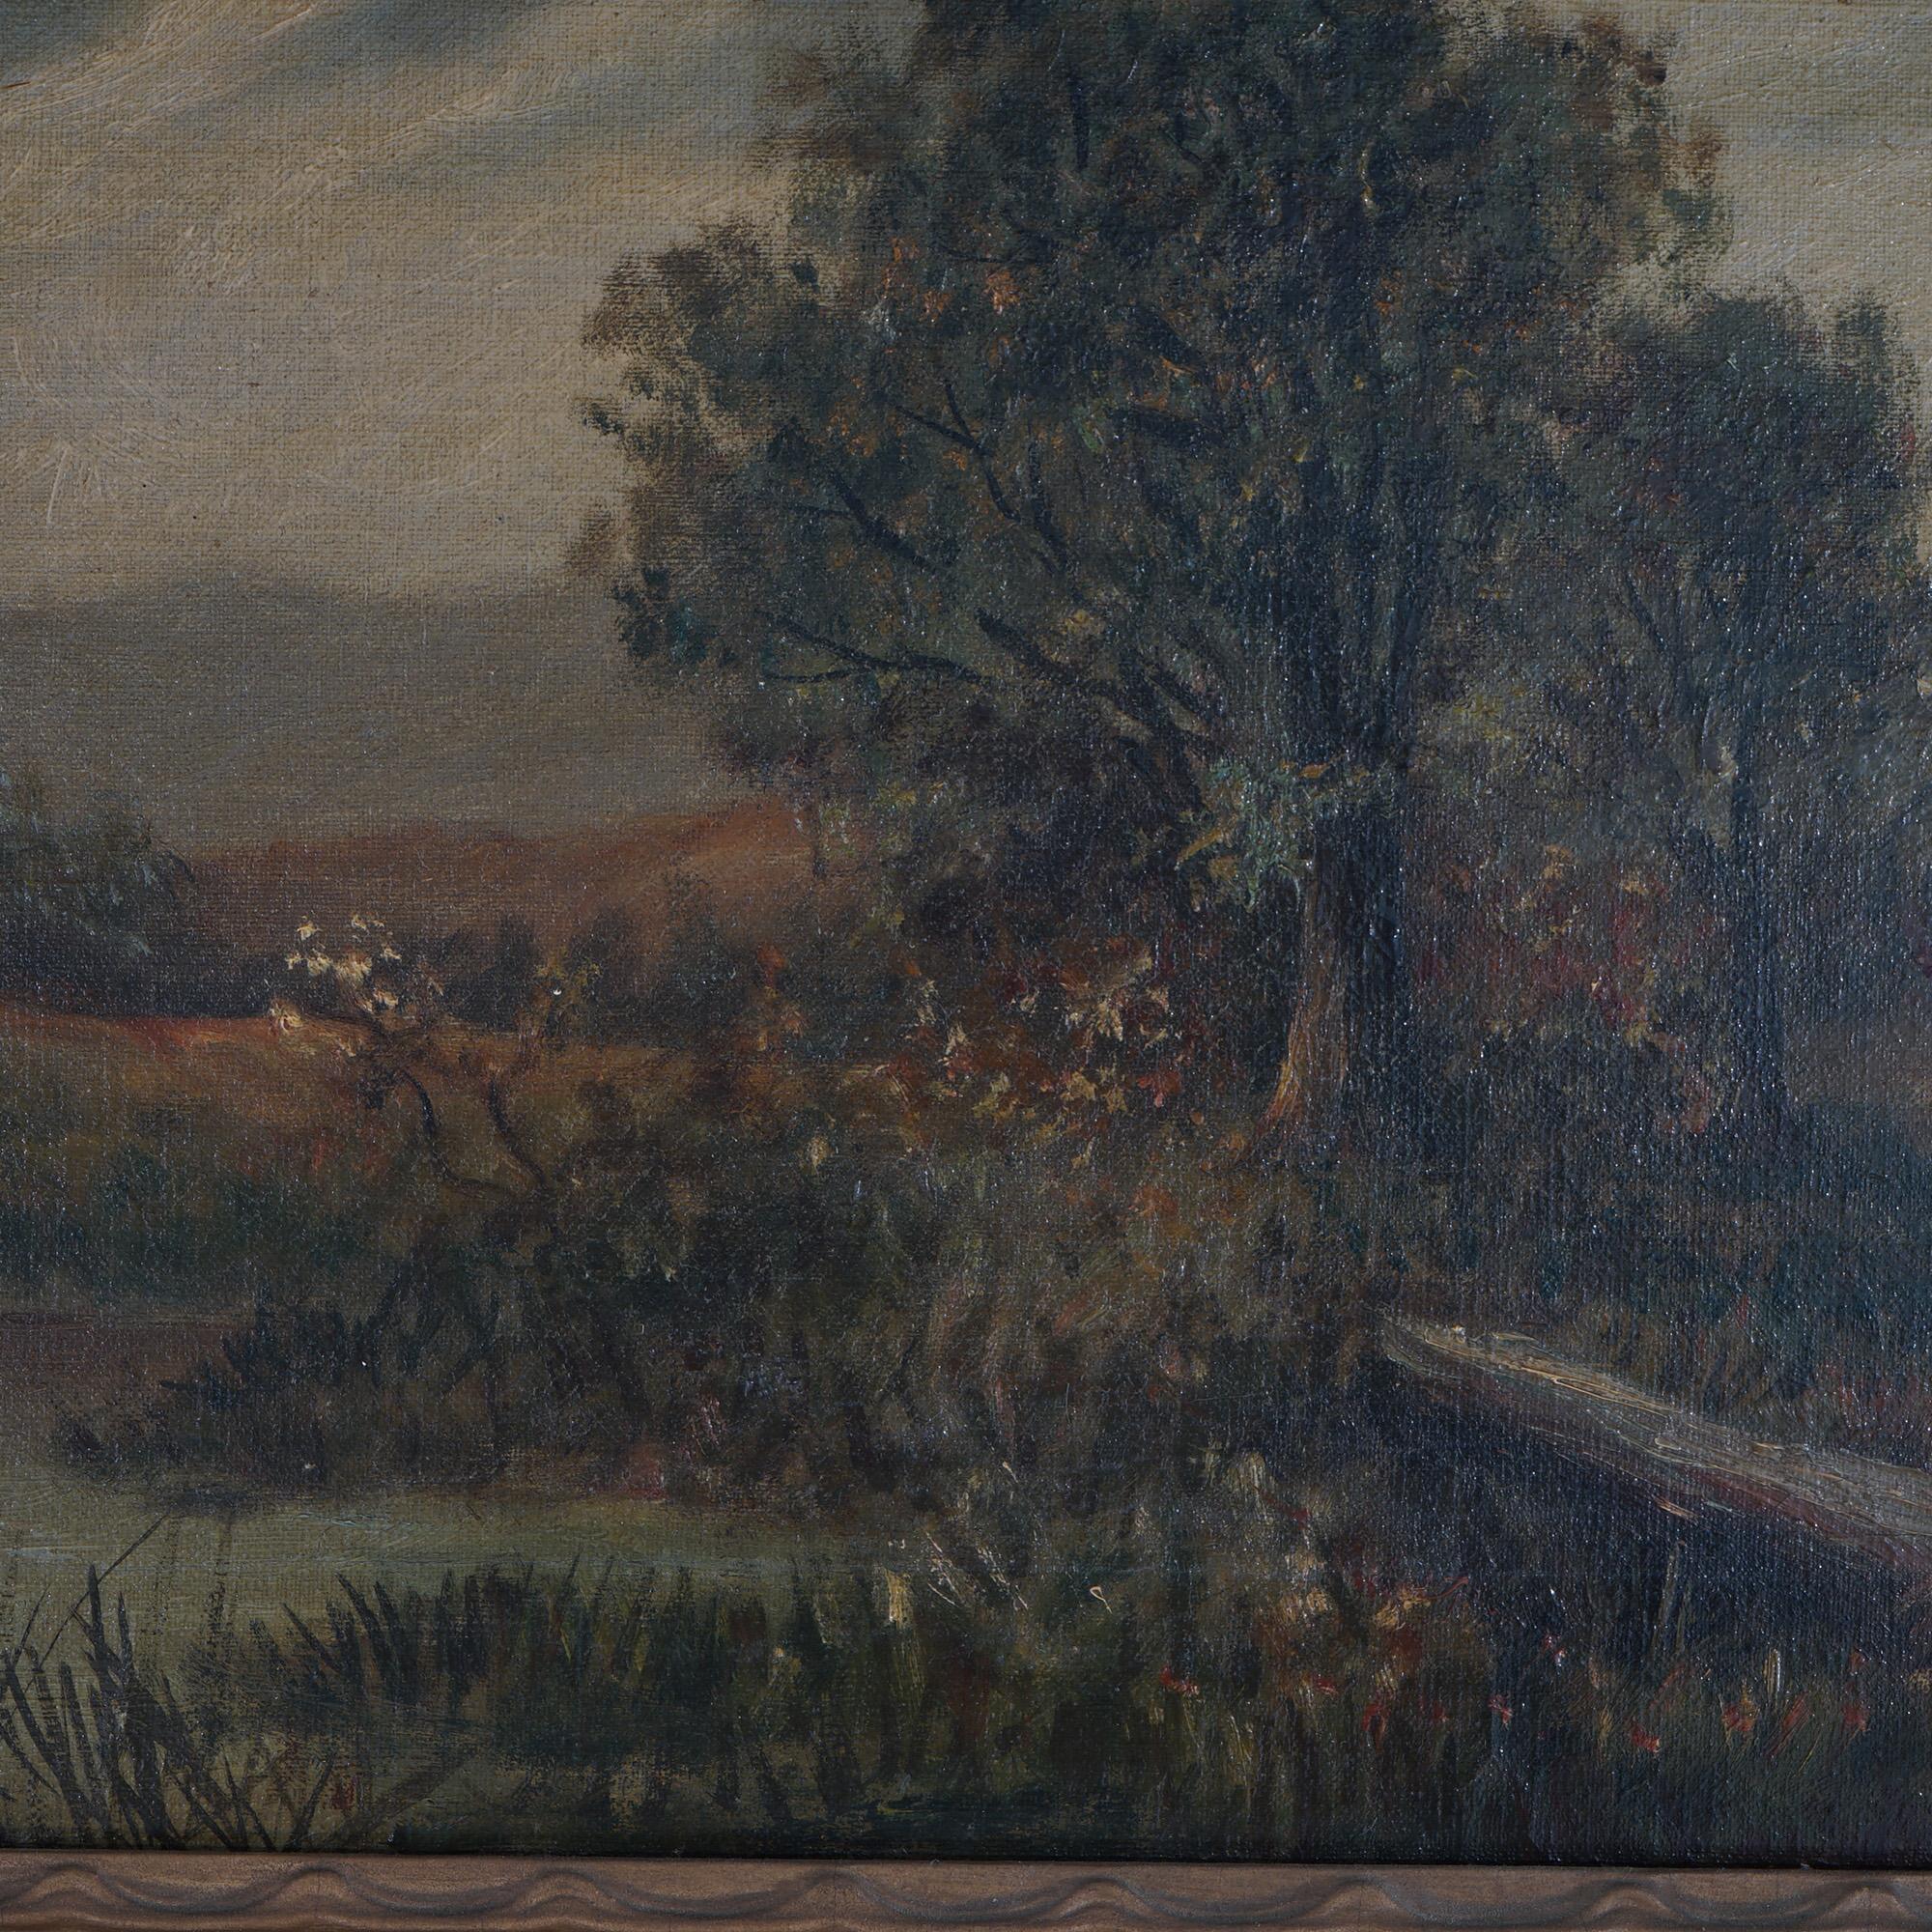 Hand-Painted Chatten Oil on Canvas Landscape of Rural Village Scene, Framed, C1890 For Sale